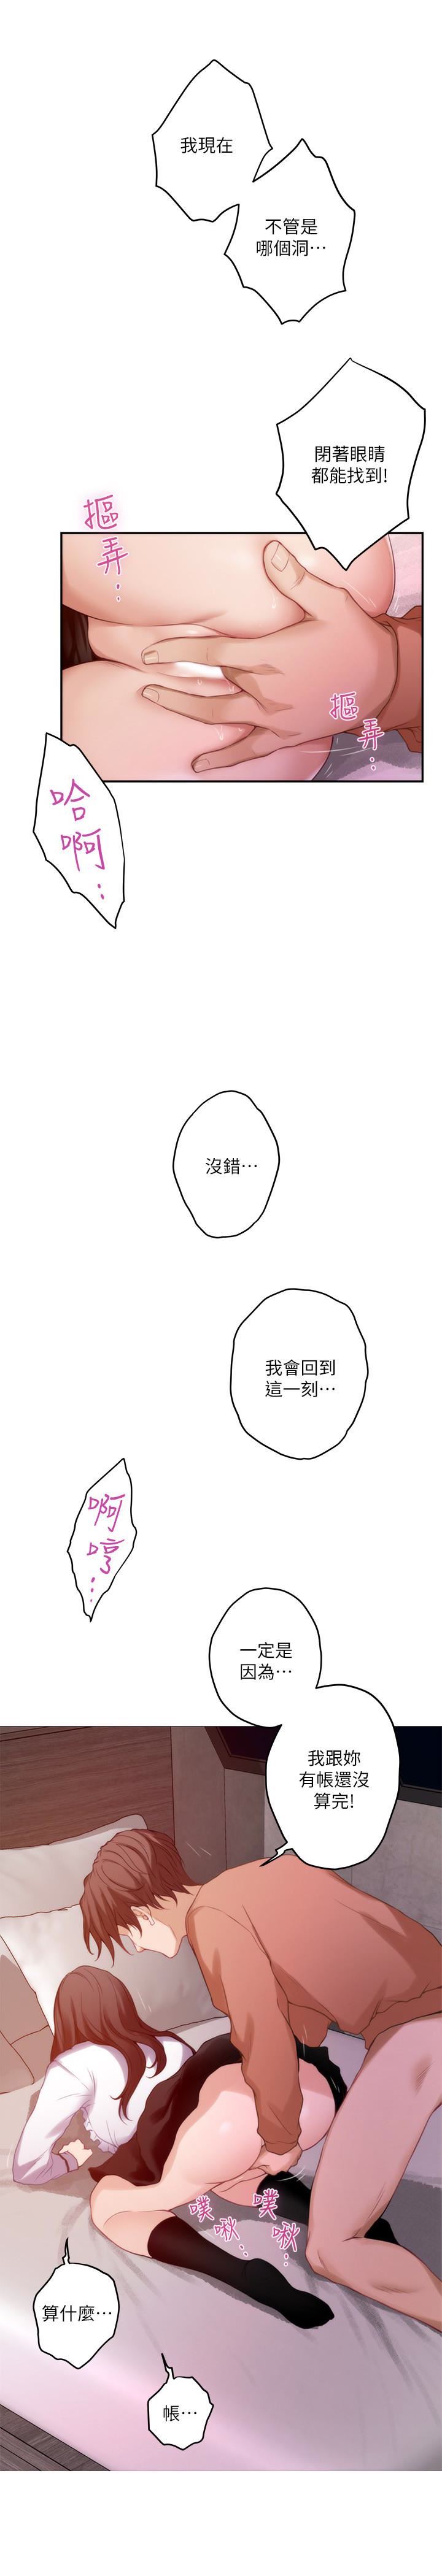 S-Mate  停刊公告 漫画图片8.jpg